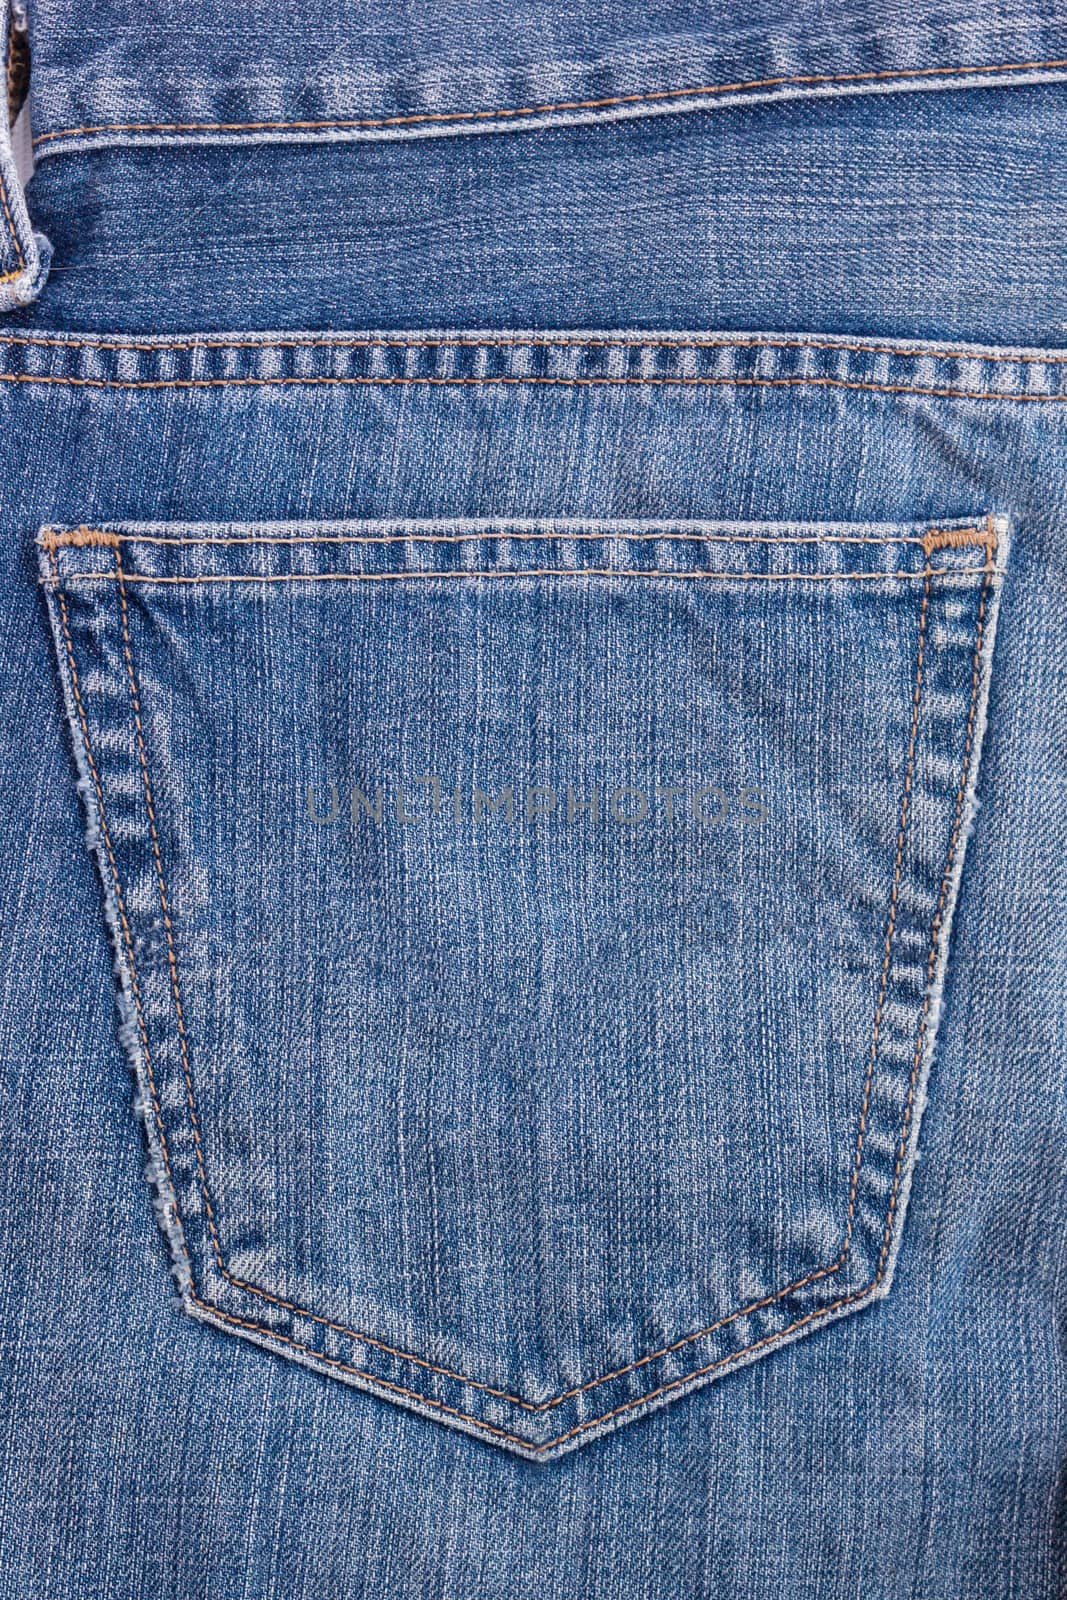 denim blue jean pocket texture is the classic indigo fashion.  by rakoptonLPN